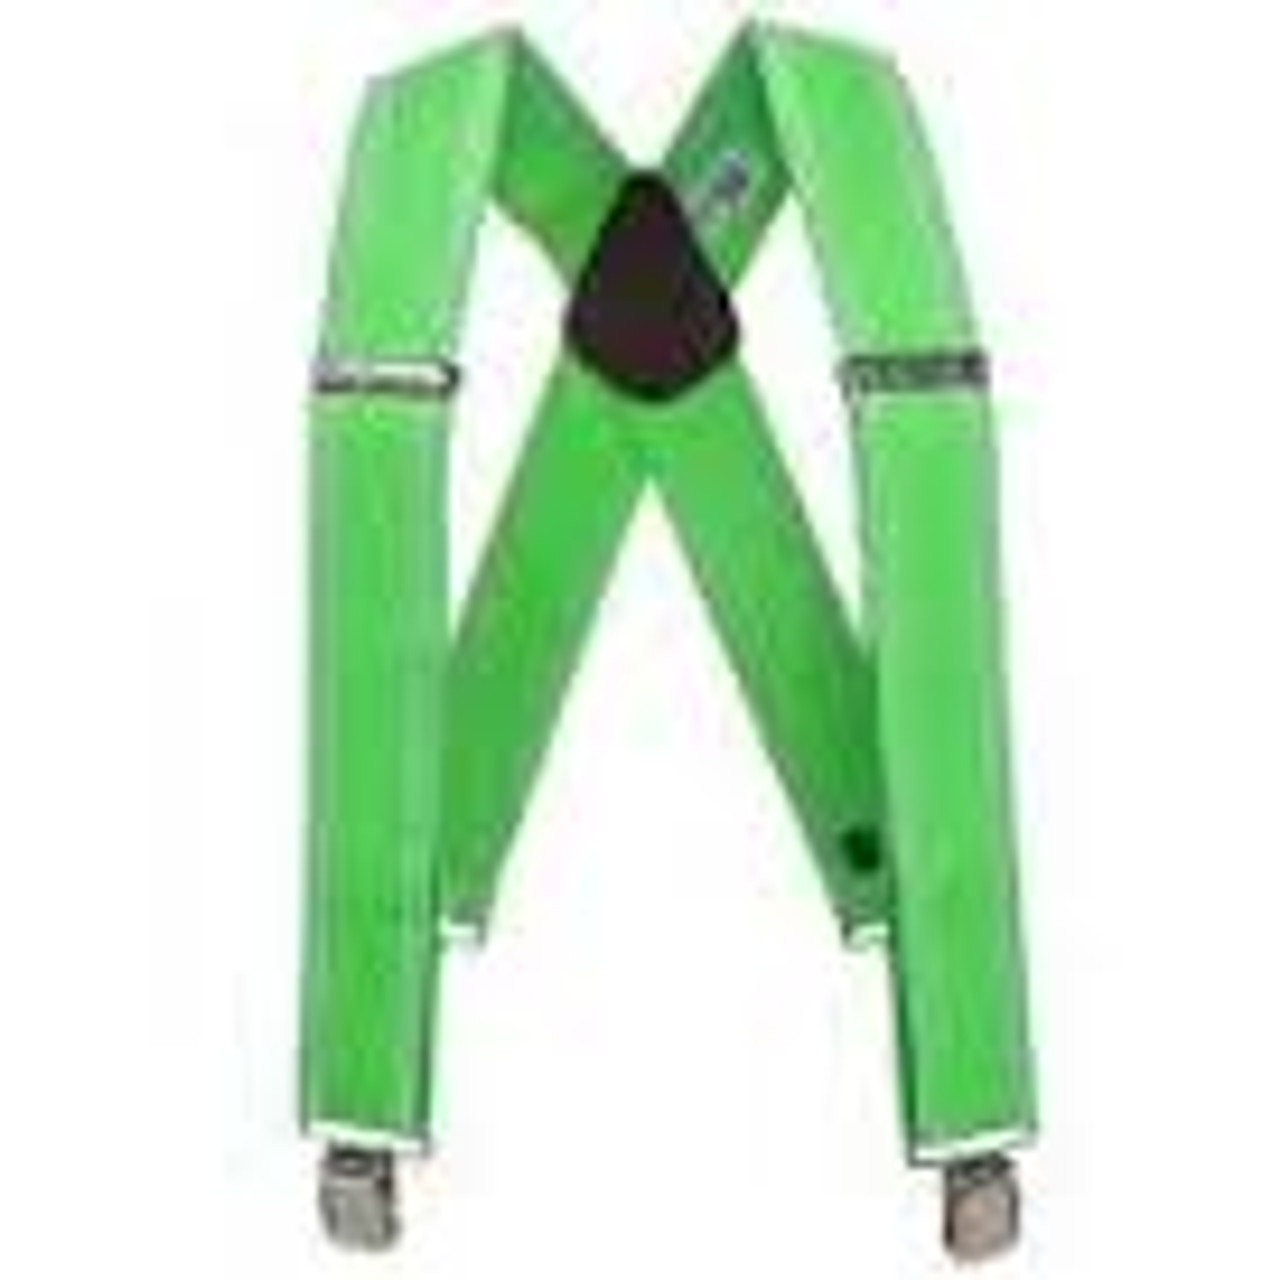 Carhartt CH45005-075-OS Tradesmen Suspender, One-Size, Elastic